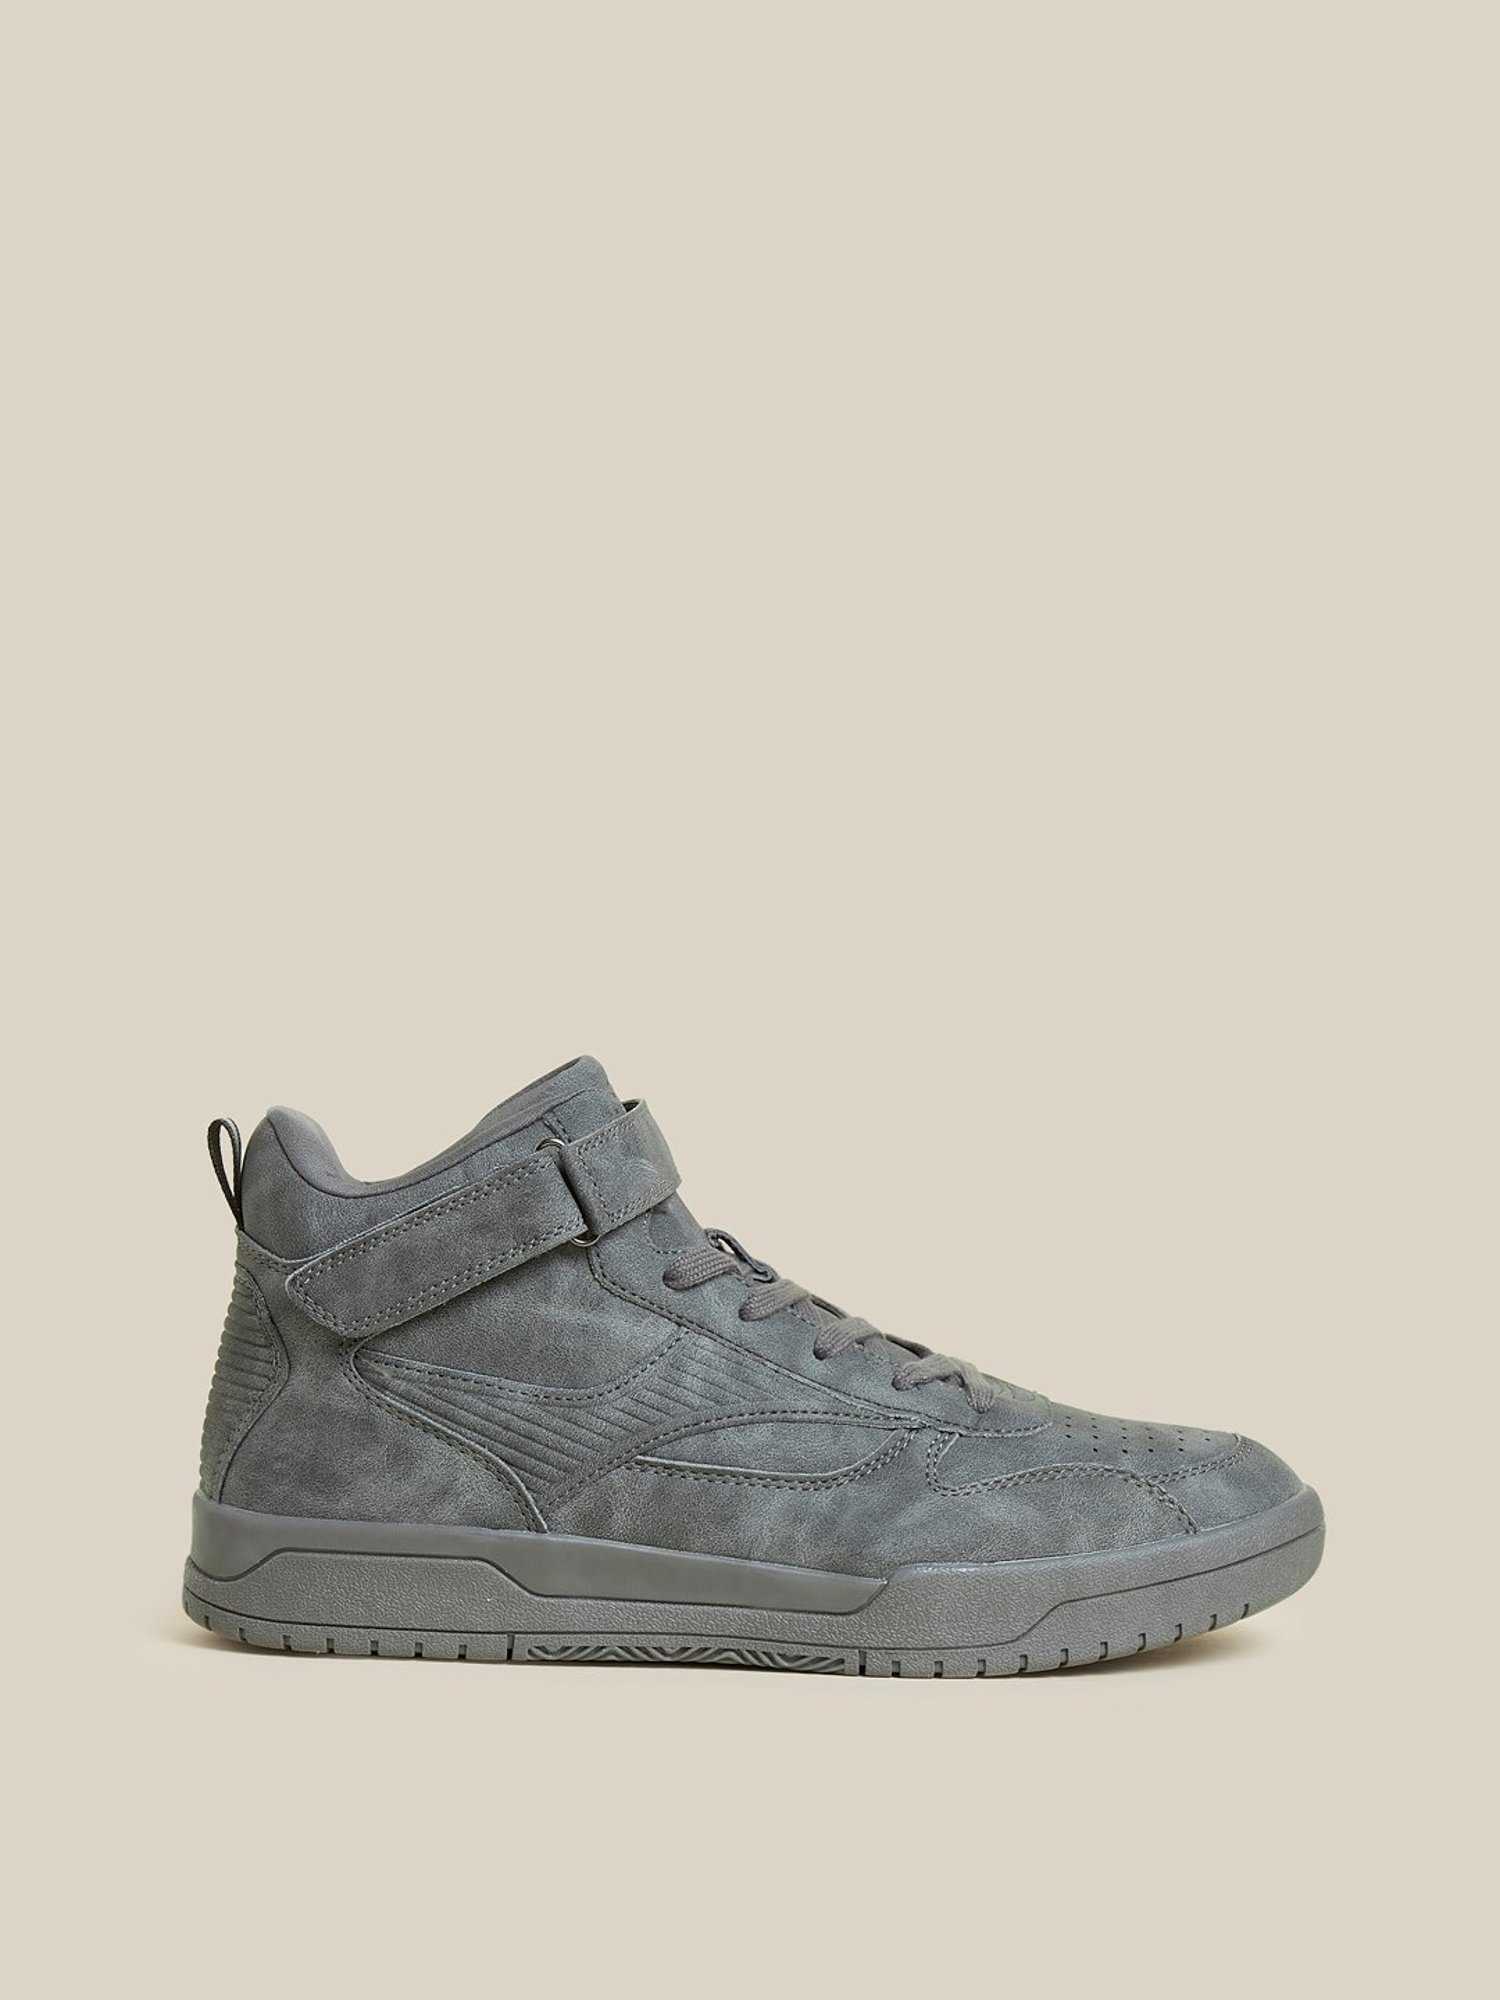 Branded Yeezy Boost 350 V2 Static Review Grey Sneakers » Shopesy – Shopesy